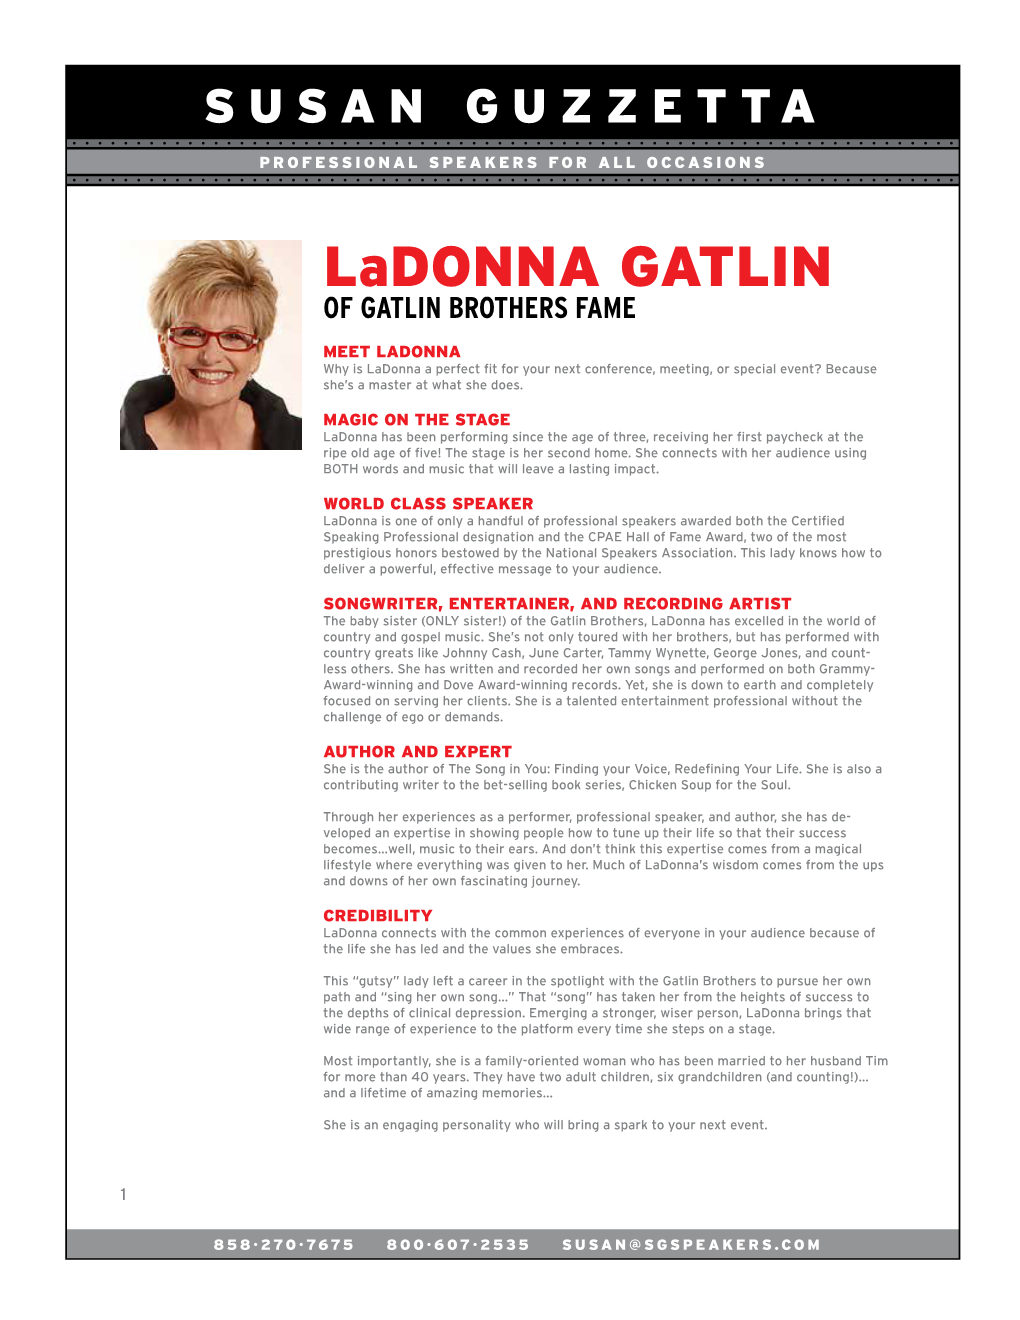 Ladonna GATLIN of GATLIN BROTHERS FAME